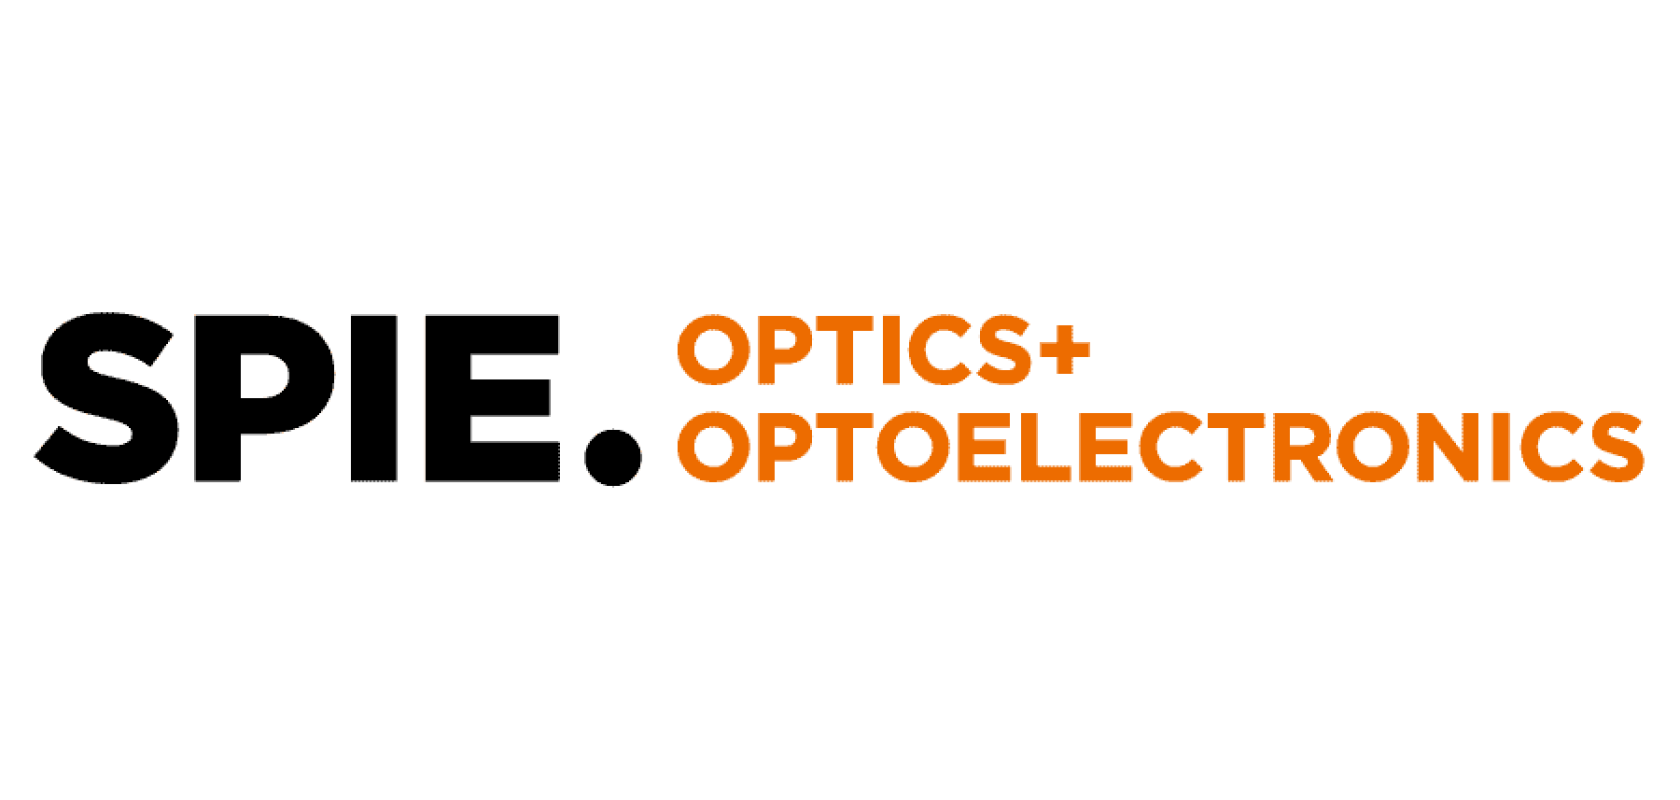 SPIE Optics and Optoelectronics